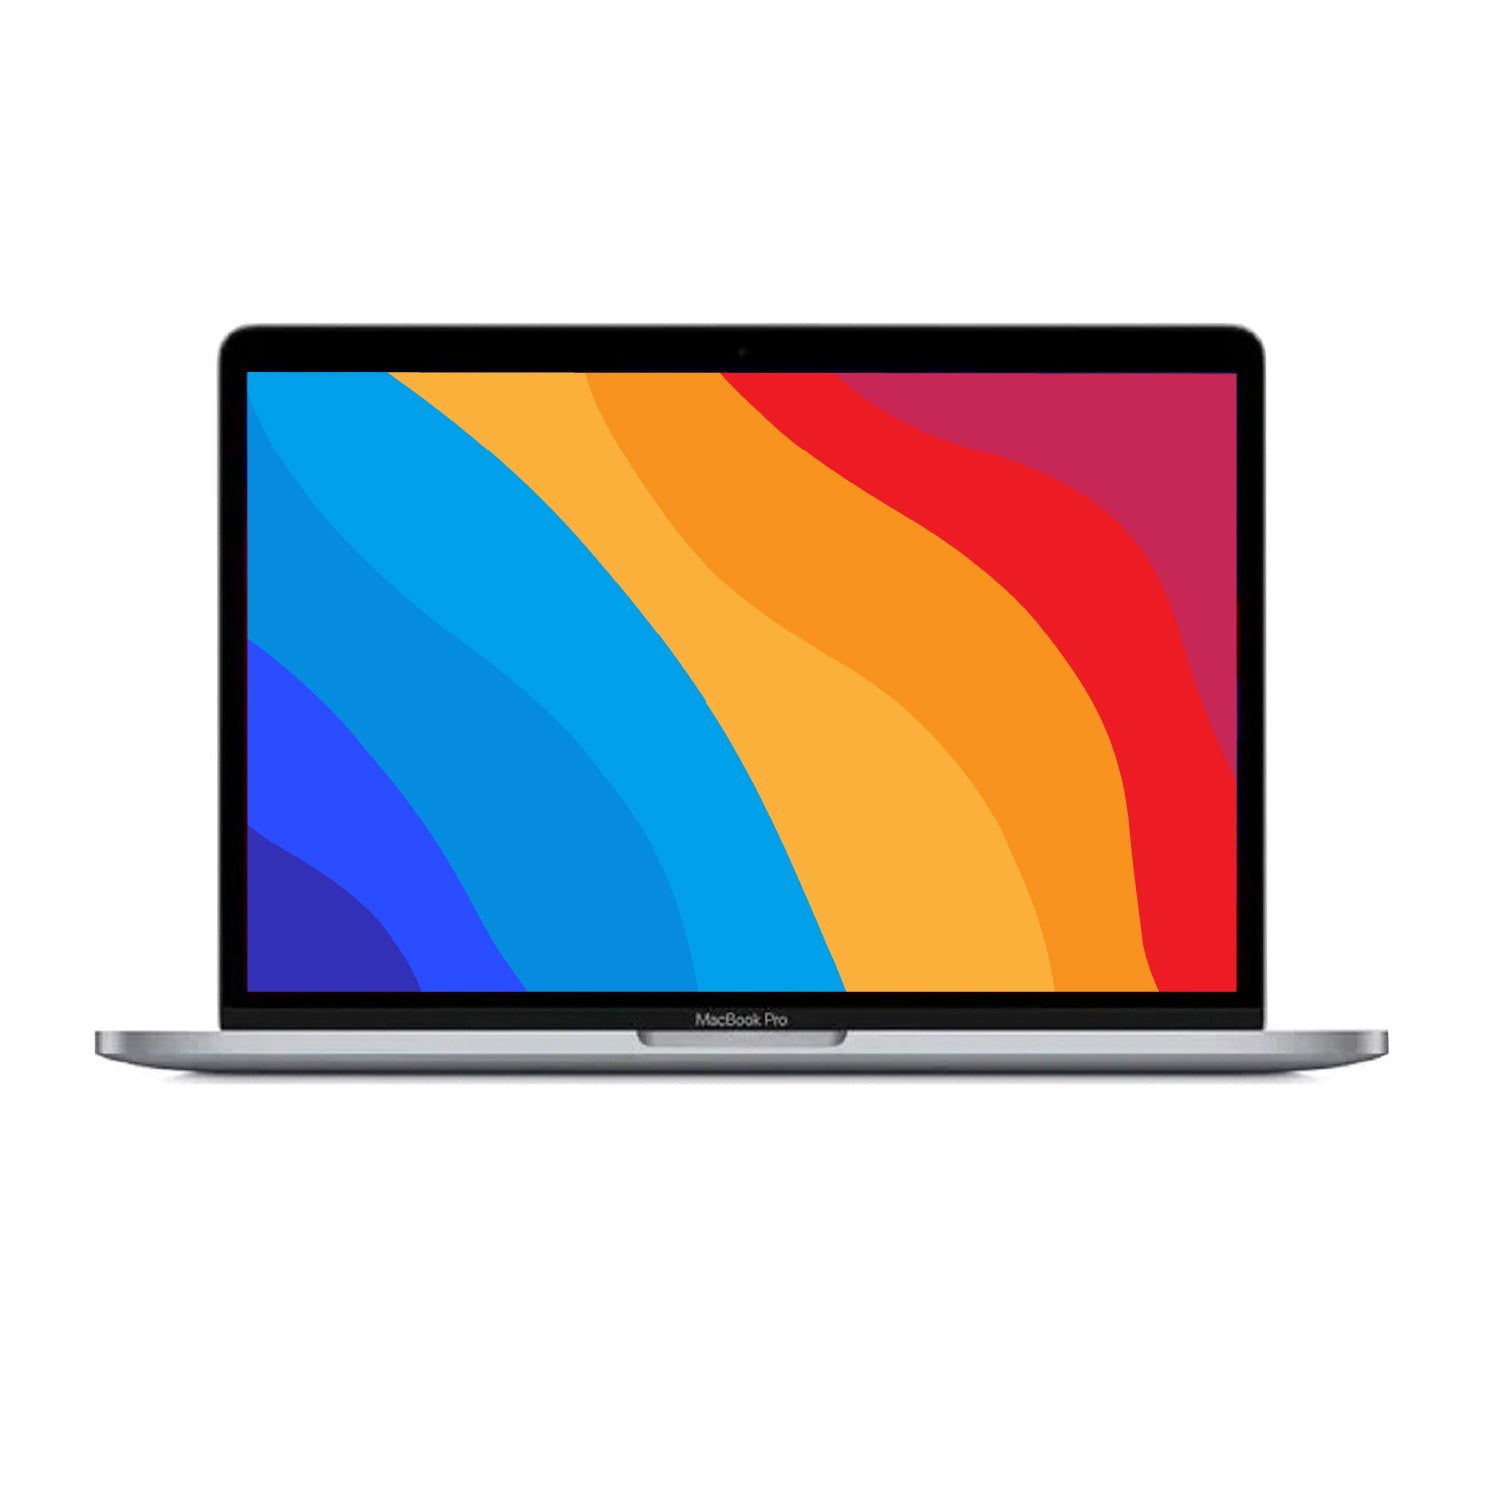 MacBook Pro 13-inch Touchbar 2018  |  i5  |  256GB SSD  |  Space Grey  |  Grade B